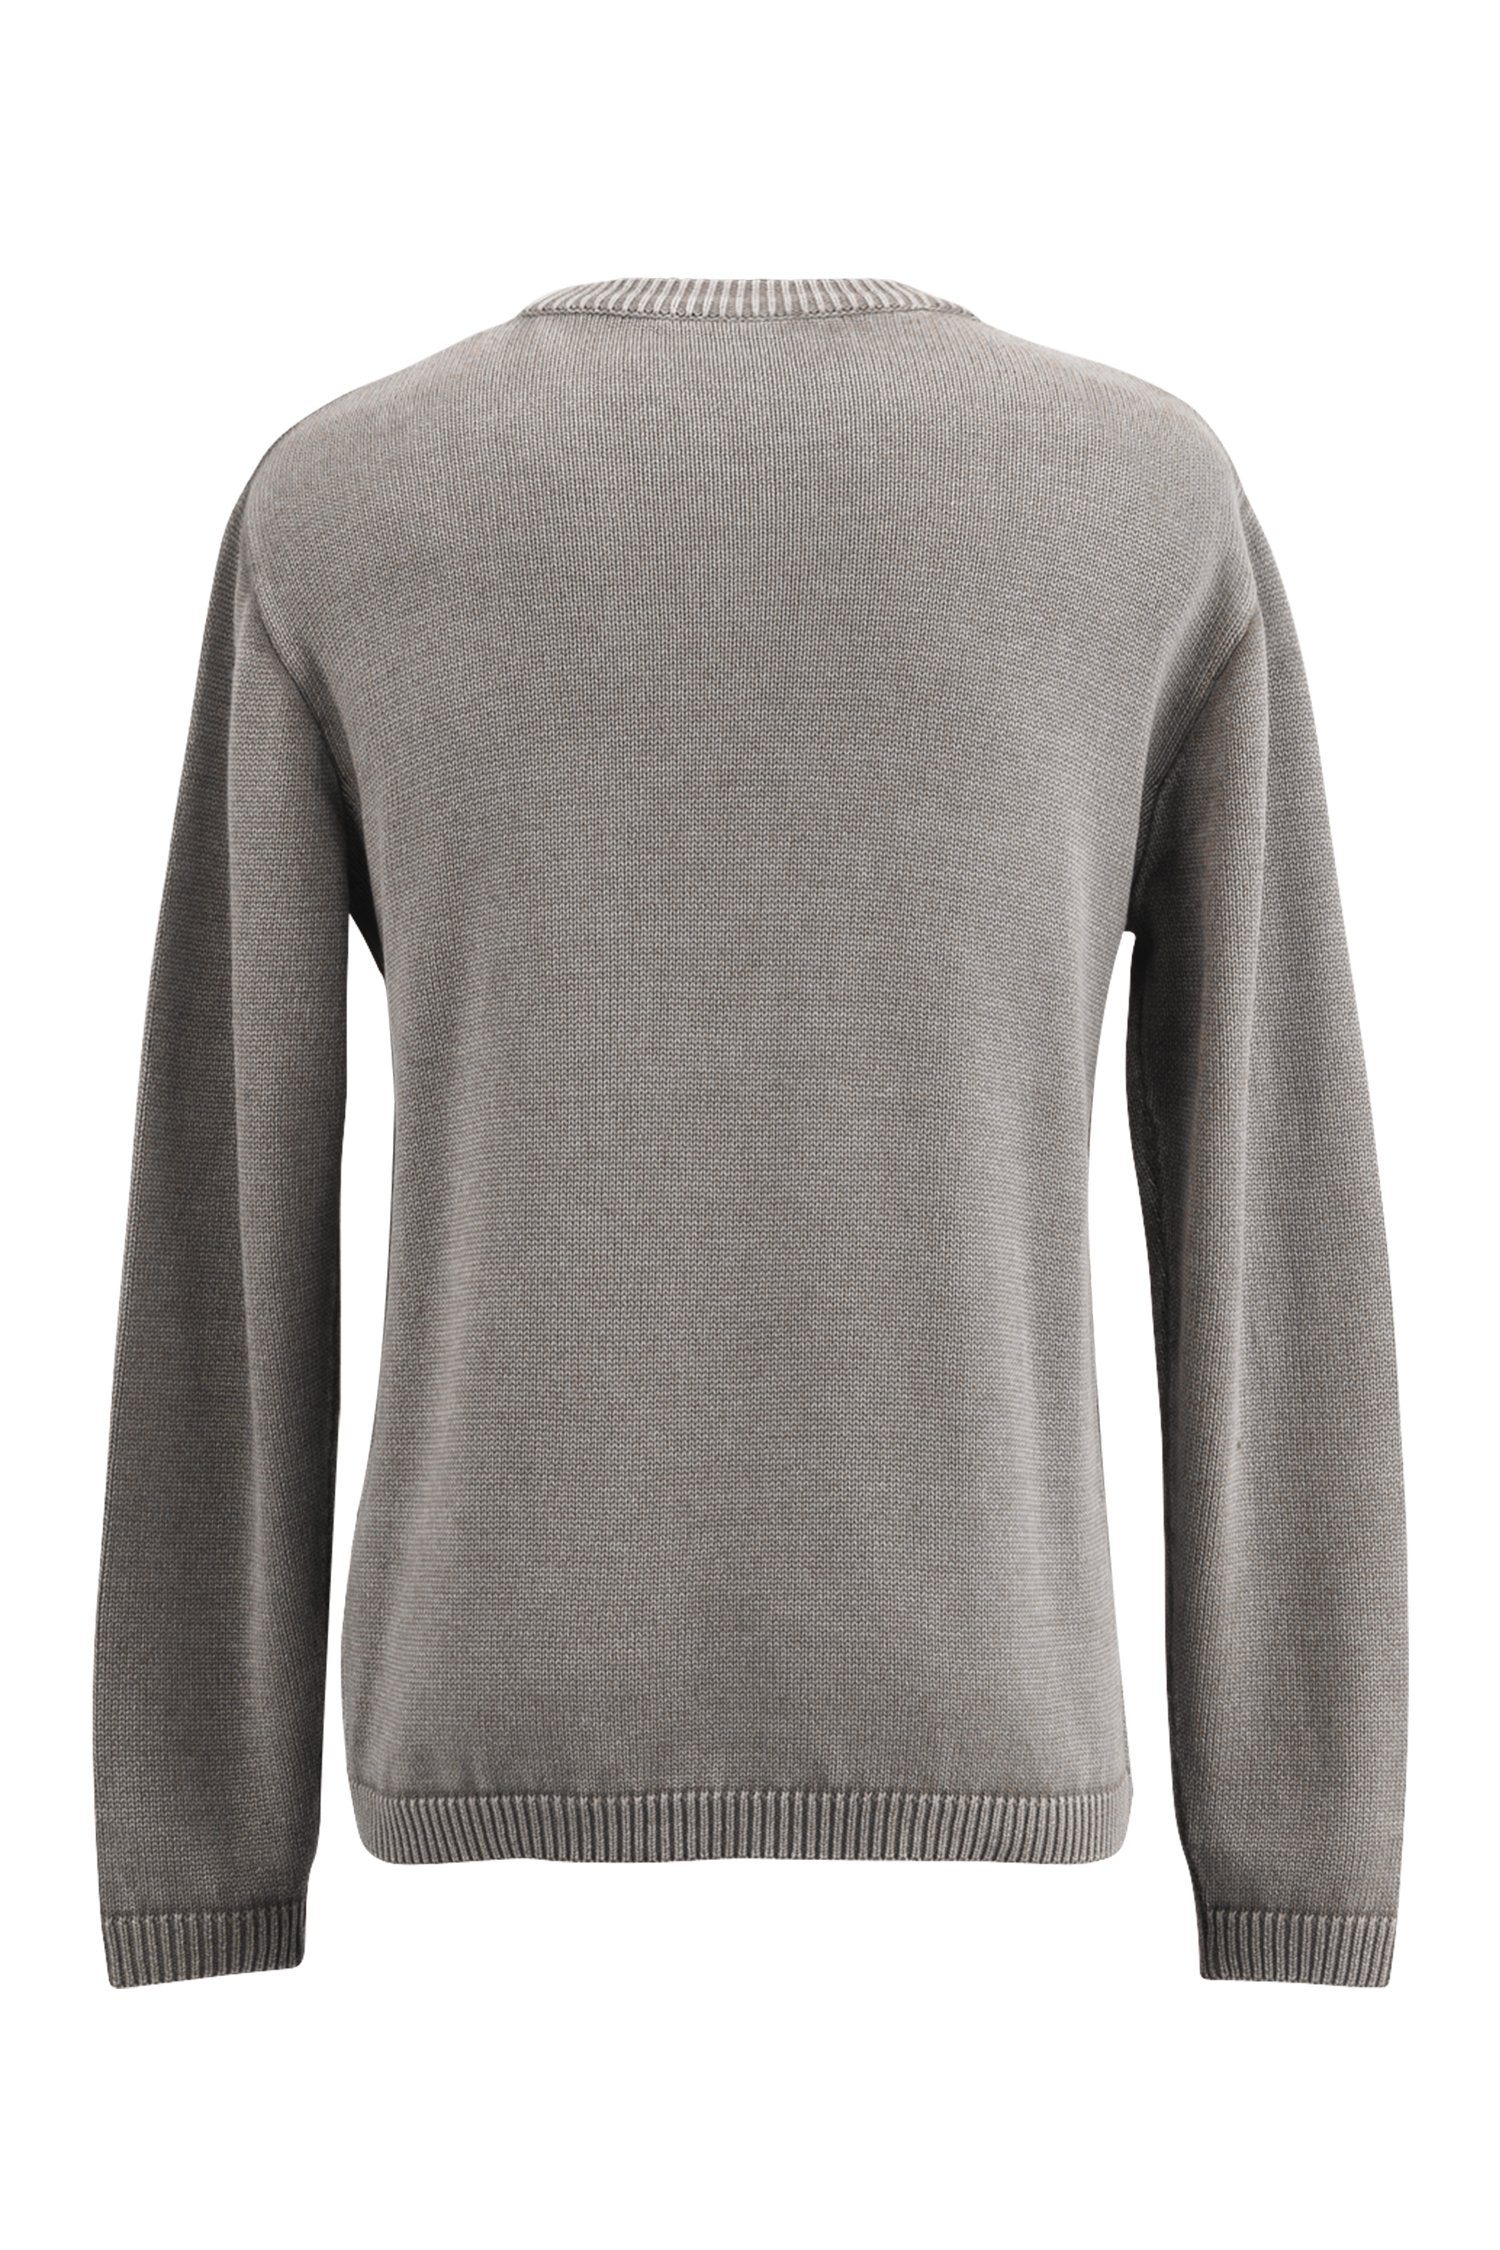 Herren Pullover Manufaktur13 Strickpullover Washed Out Sweater - Pullover, Used Look Atmungsaktiv